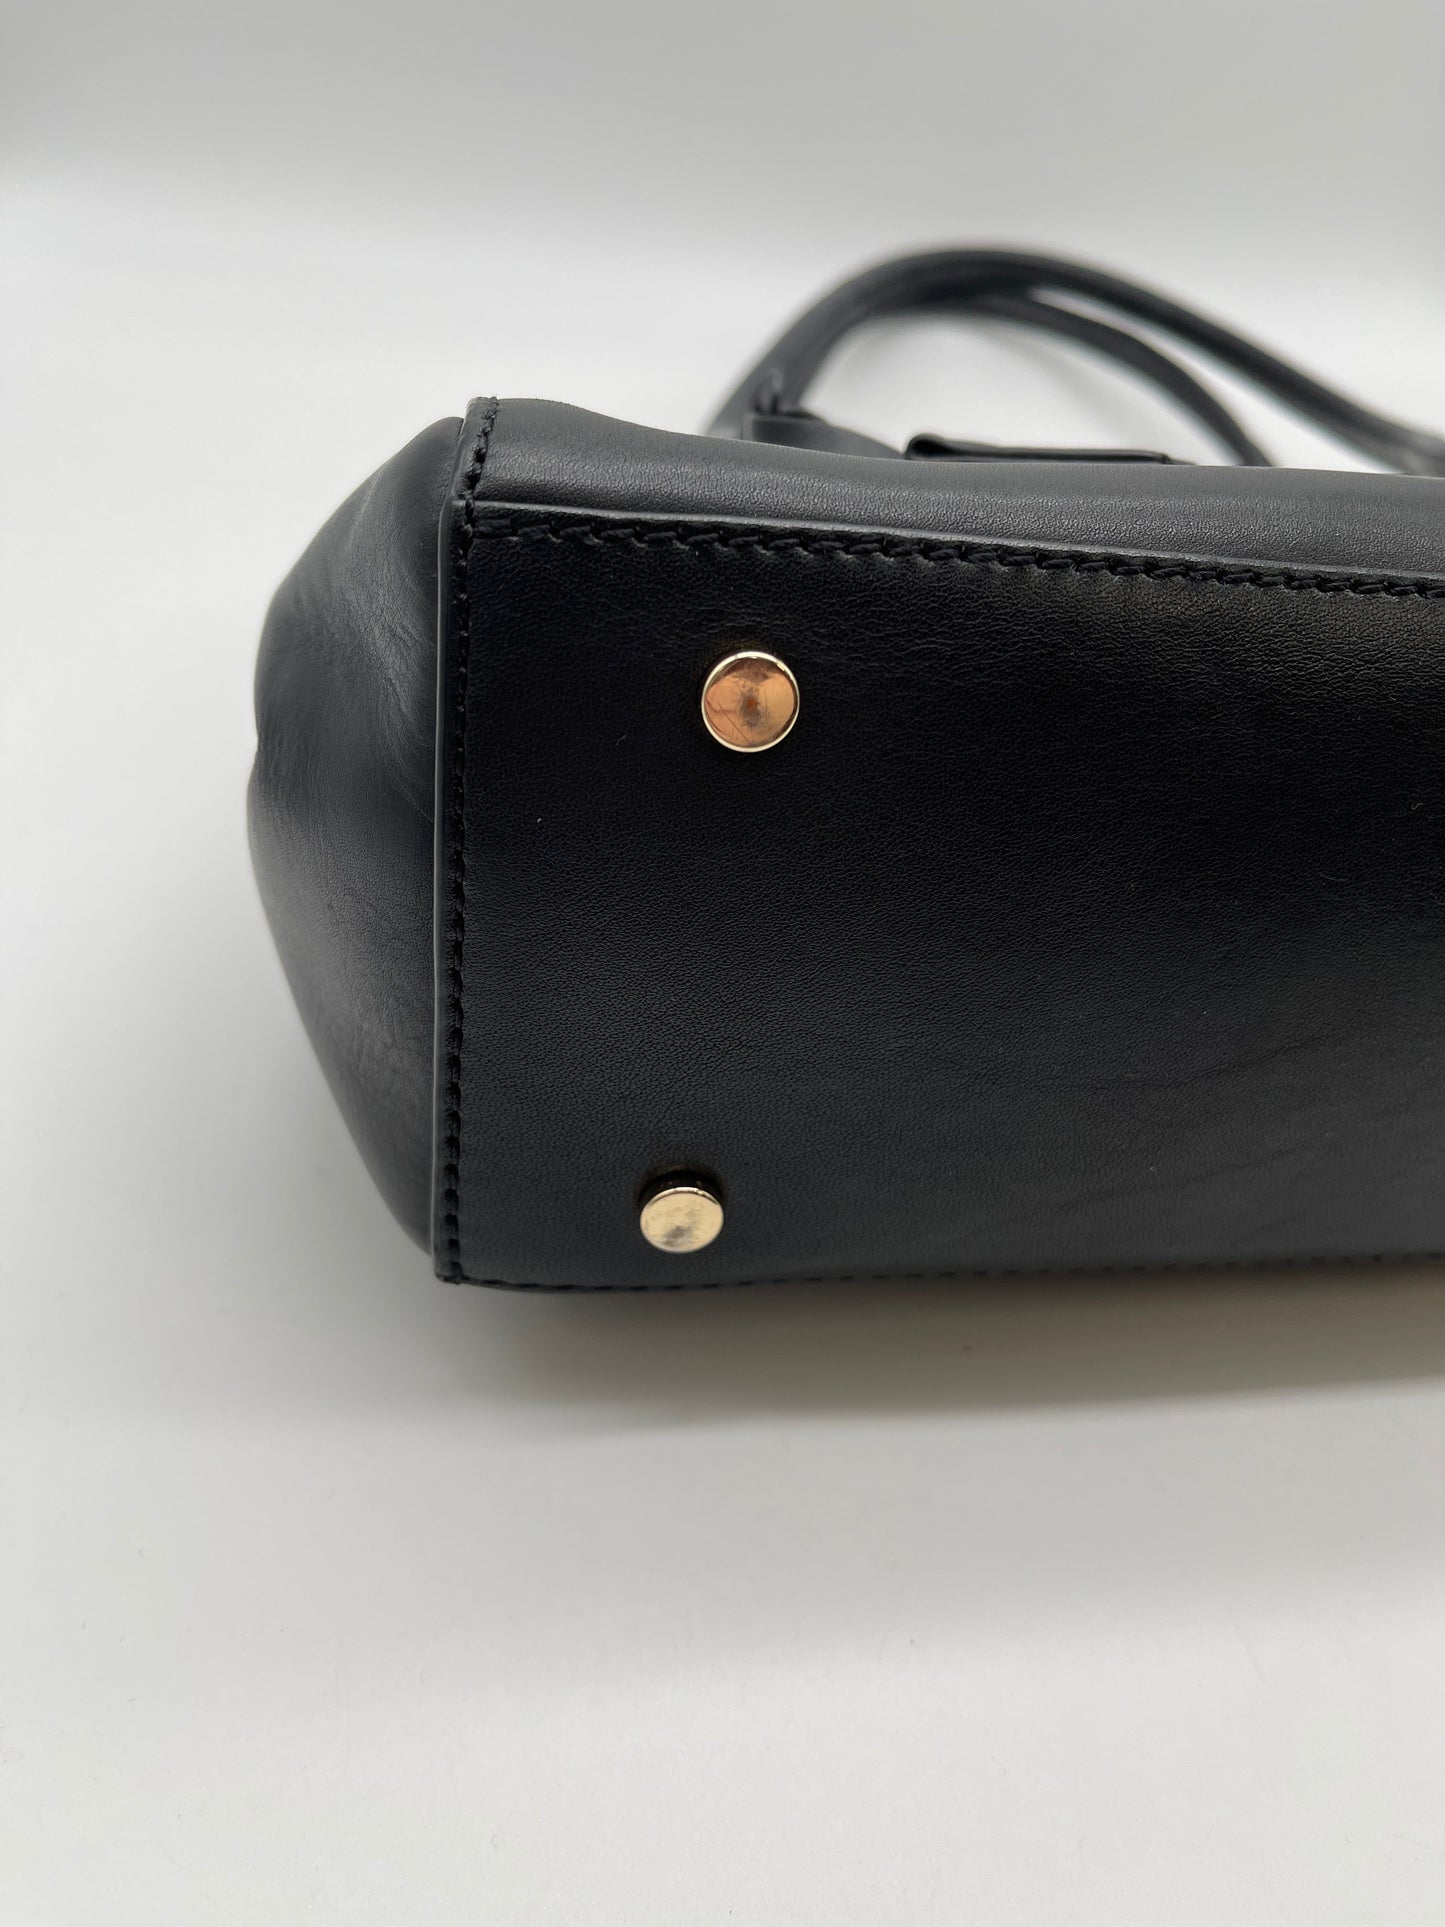 Handbag Designer By Radley London  Size: Medium